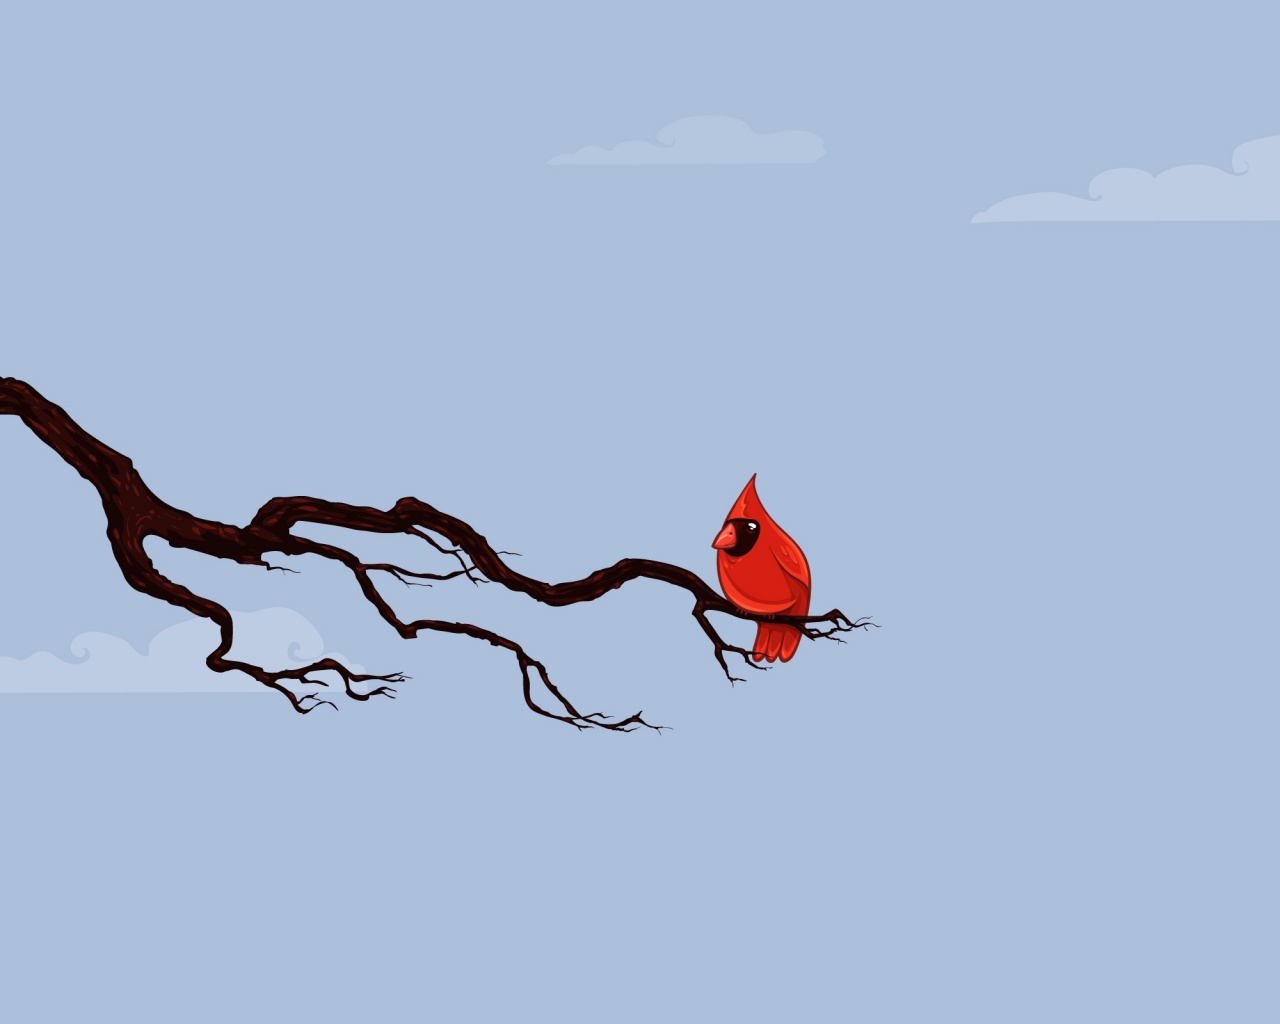 Красная птица на ветке обои